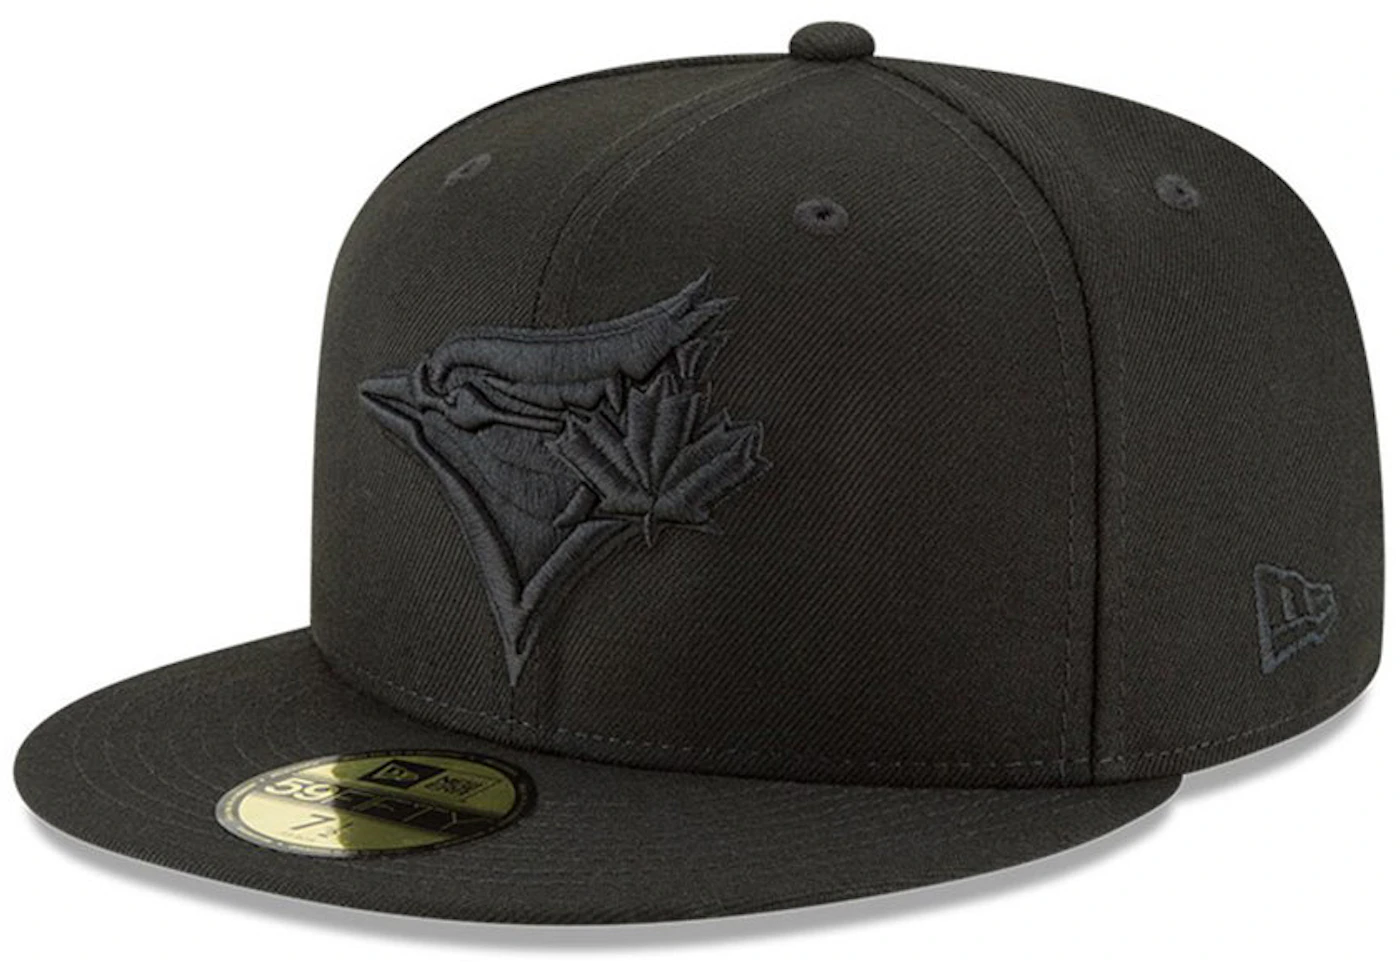 New Era Toronto Blue Jays 59FIFTY Fitted Hat Black/Black